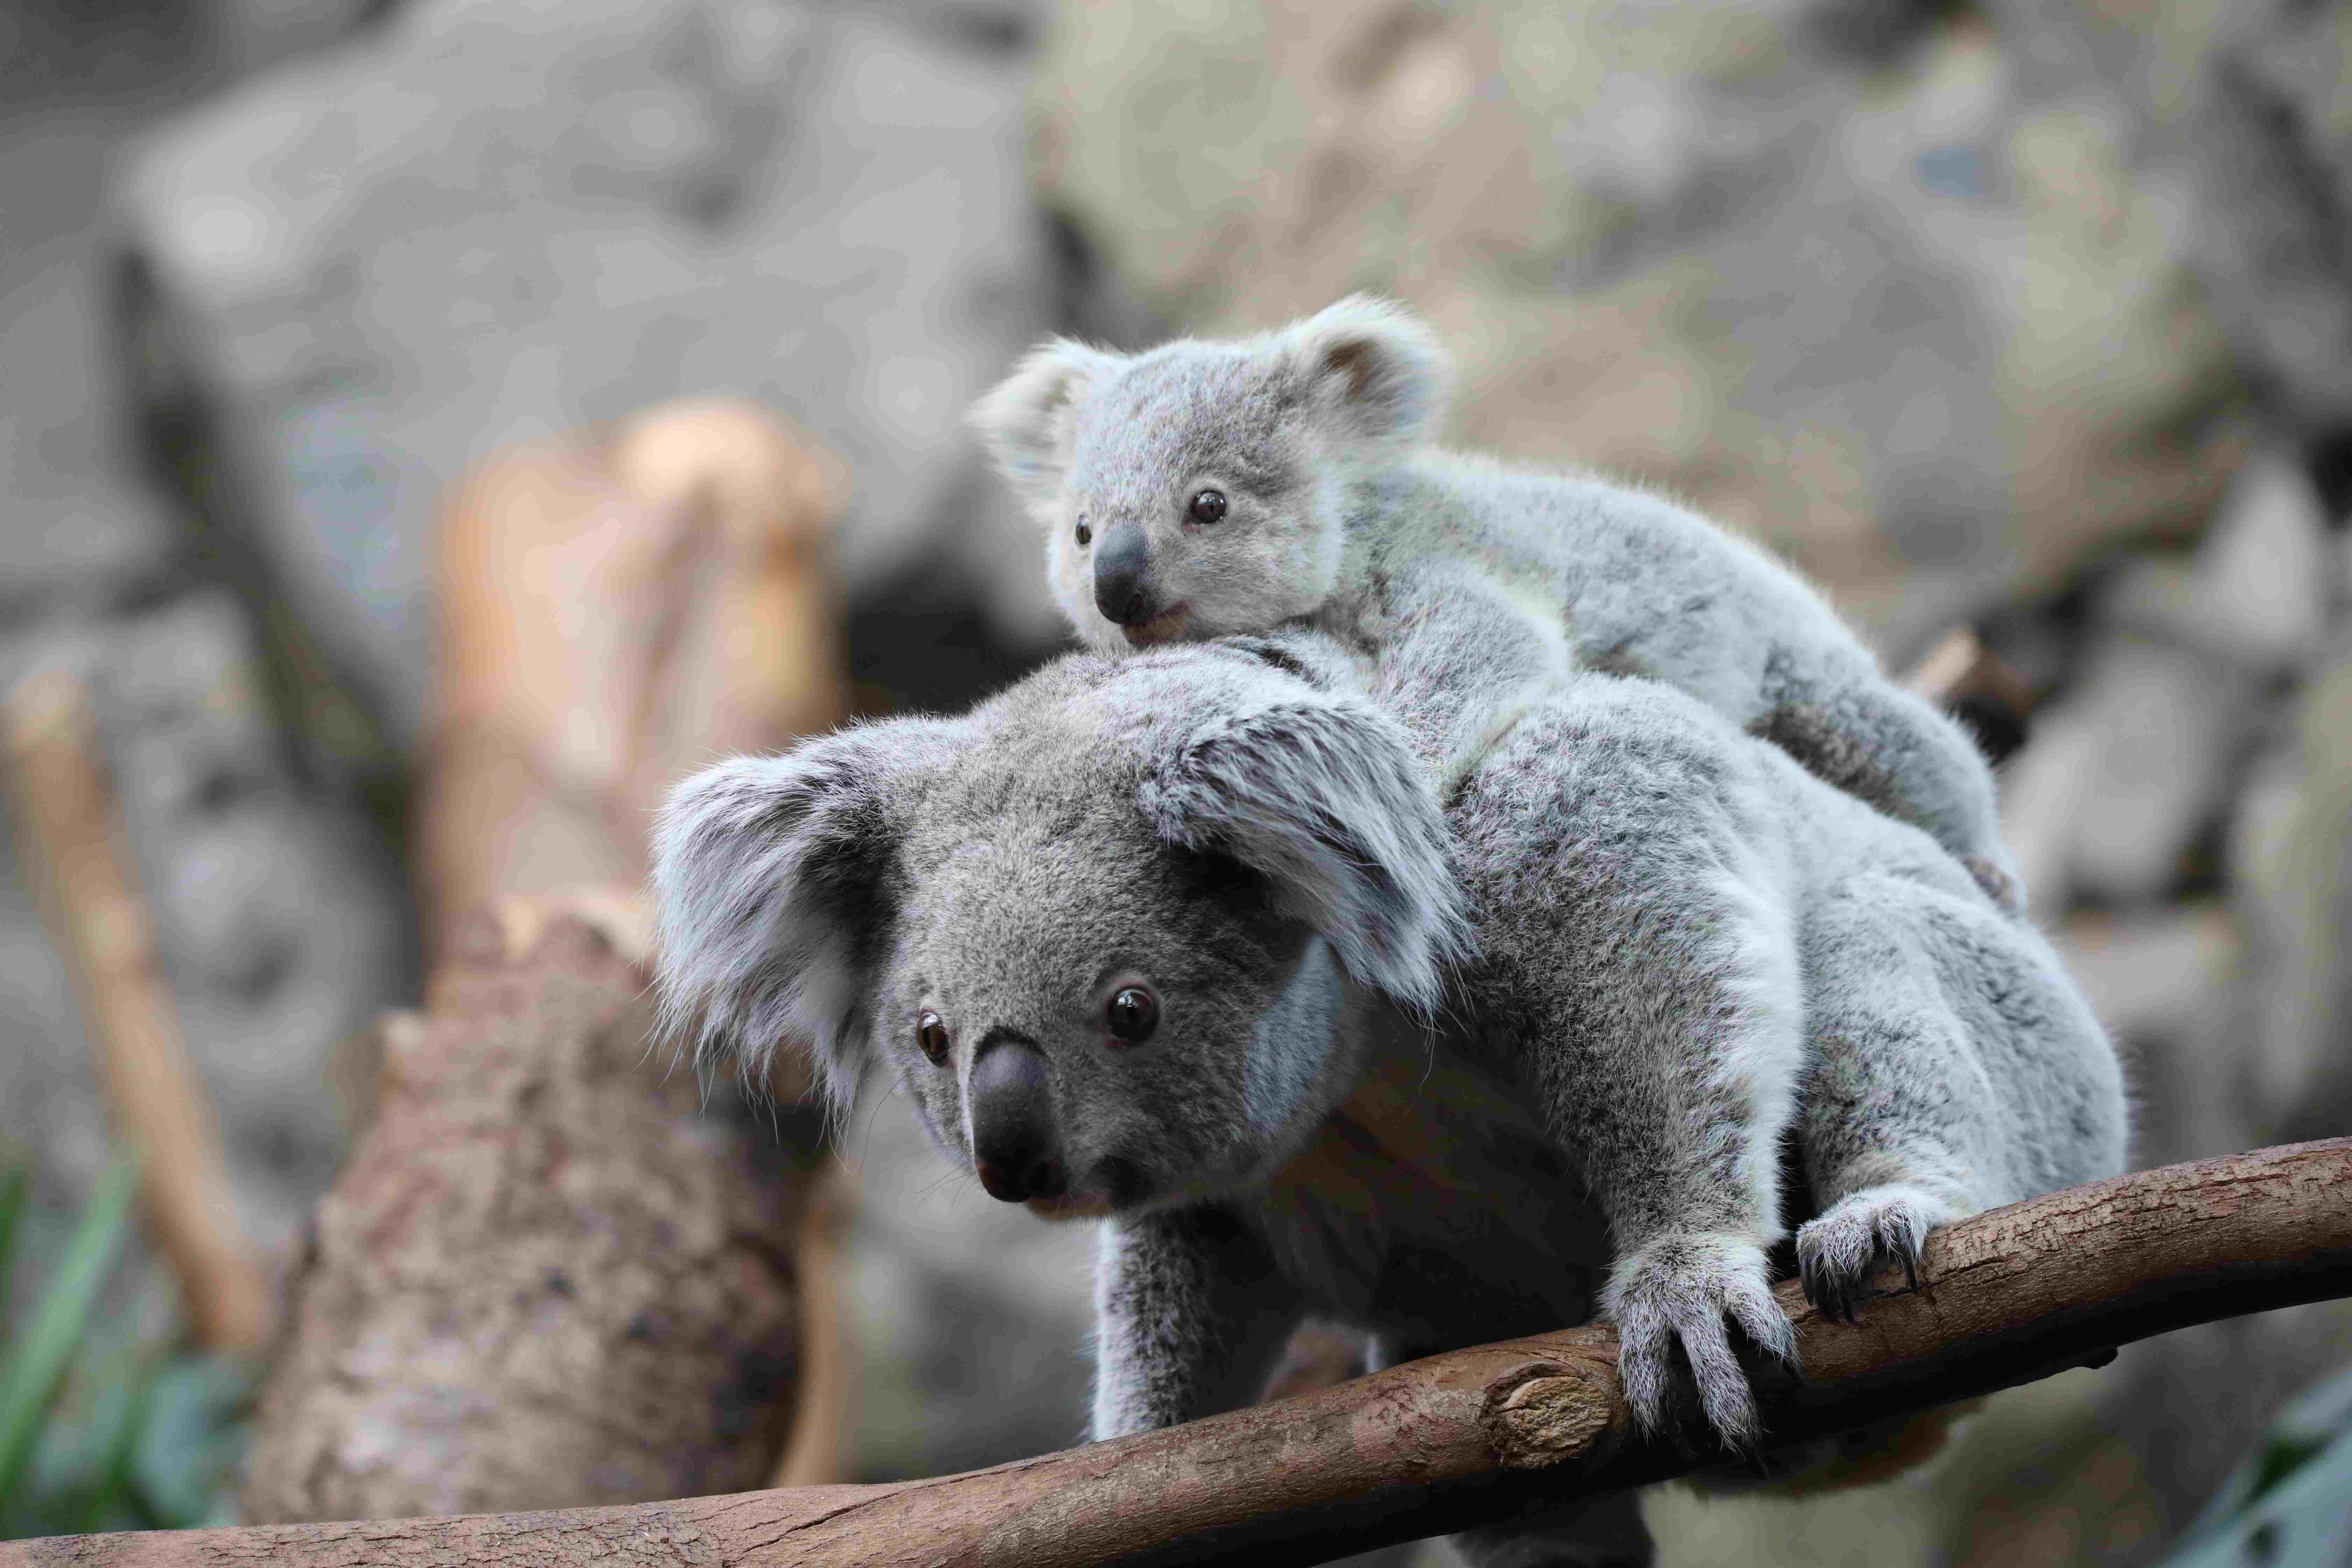 Queensland koala Inala with joey on her back 

Image: AMY MIDDLETON 2023